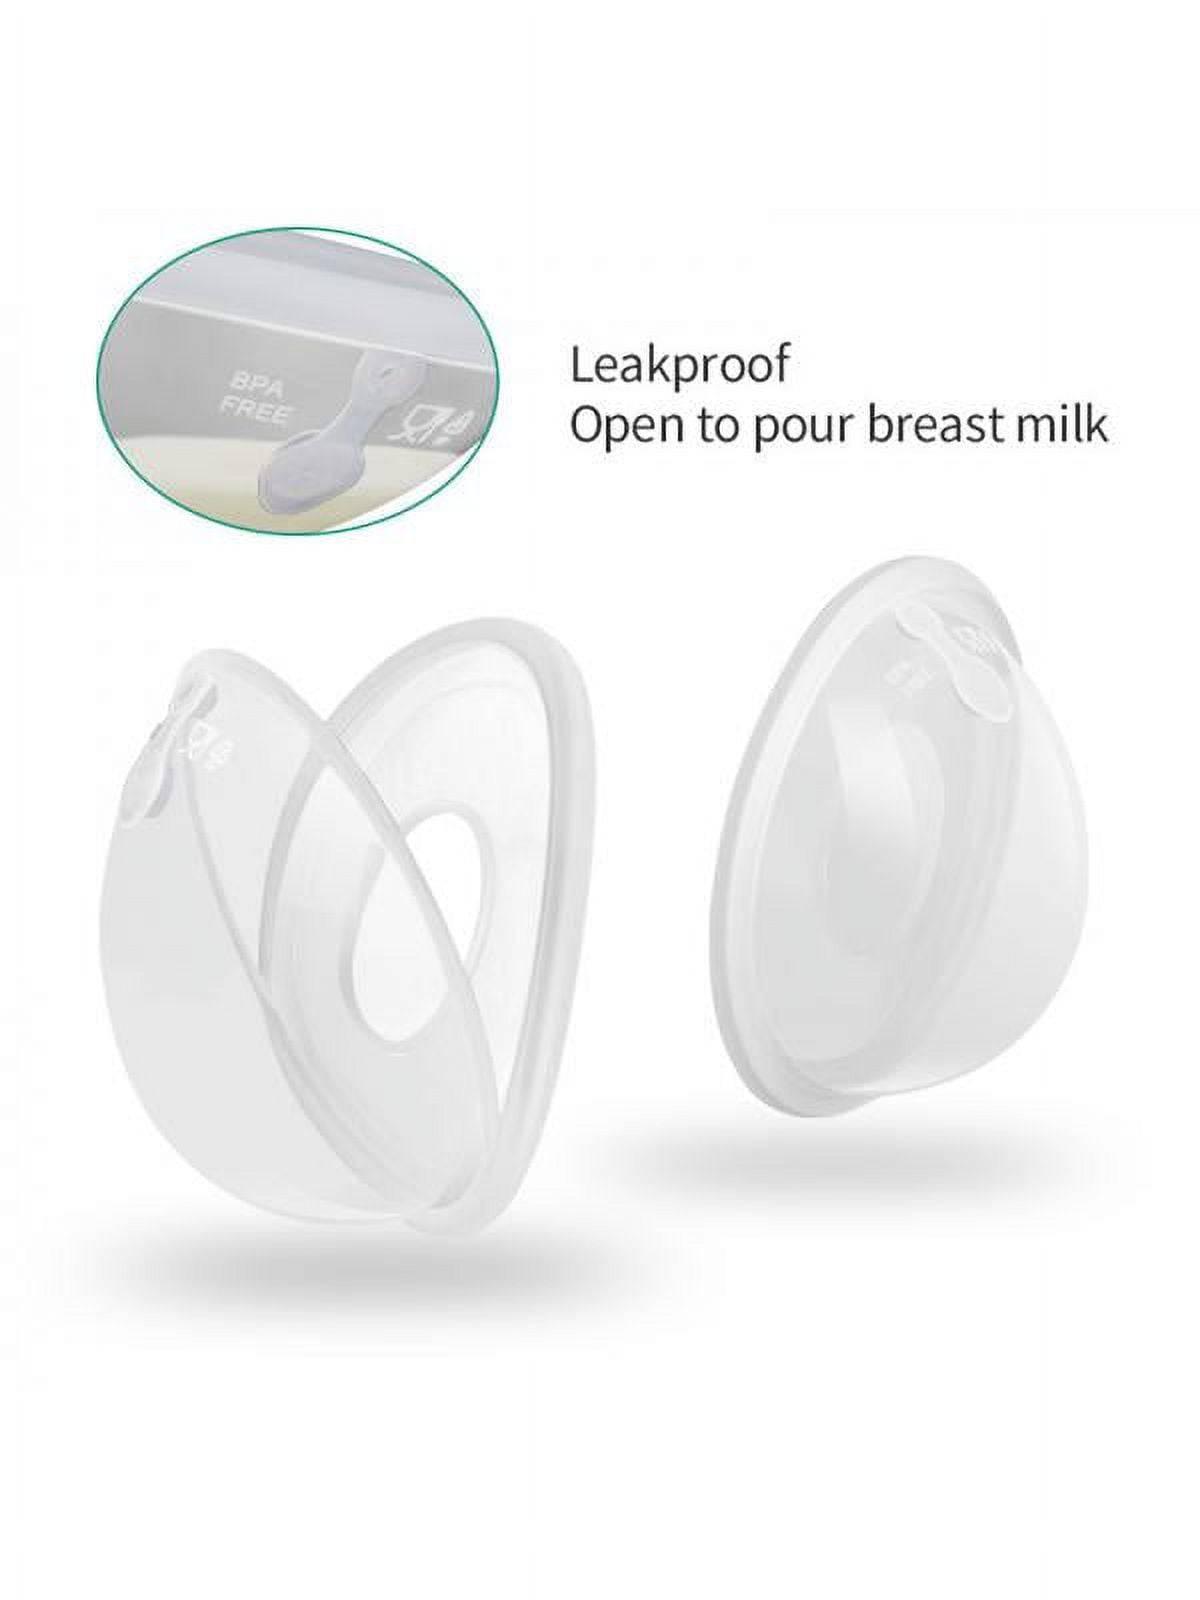 Mommyz Love Breast Feeding Essentials Kit. Breast Shell & Milk Catcher + Nipple Cream for Breastfeeding Relief